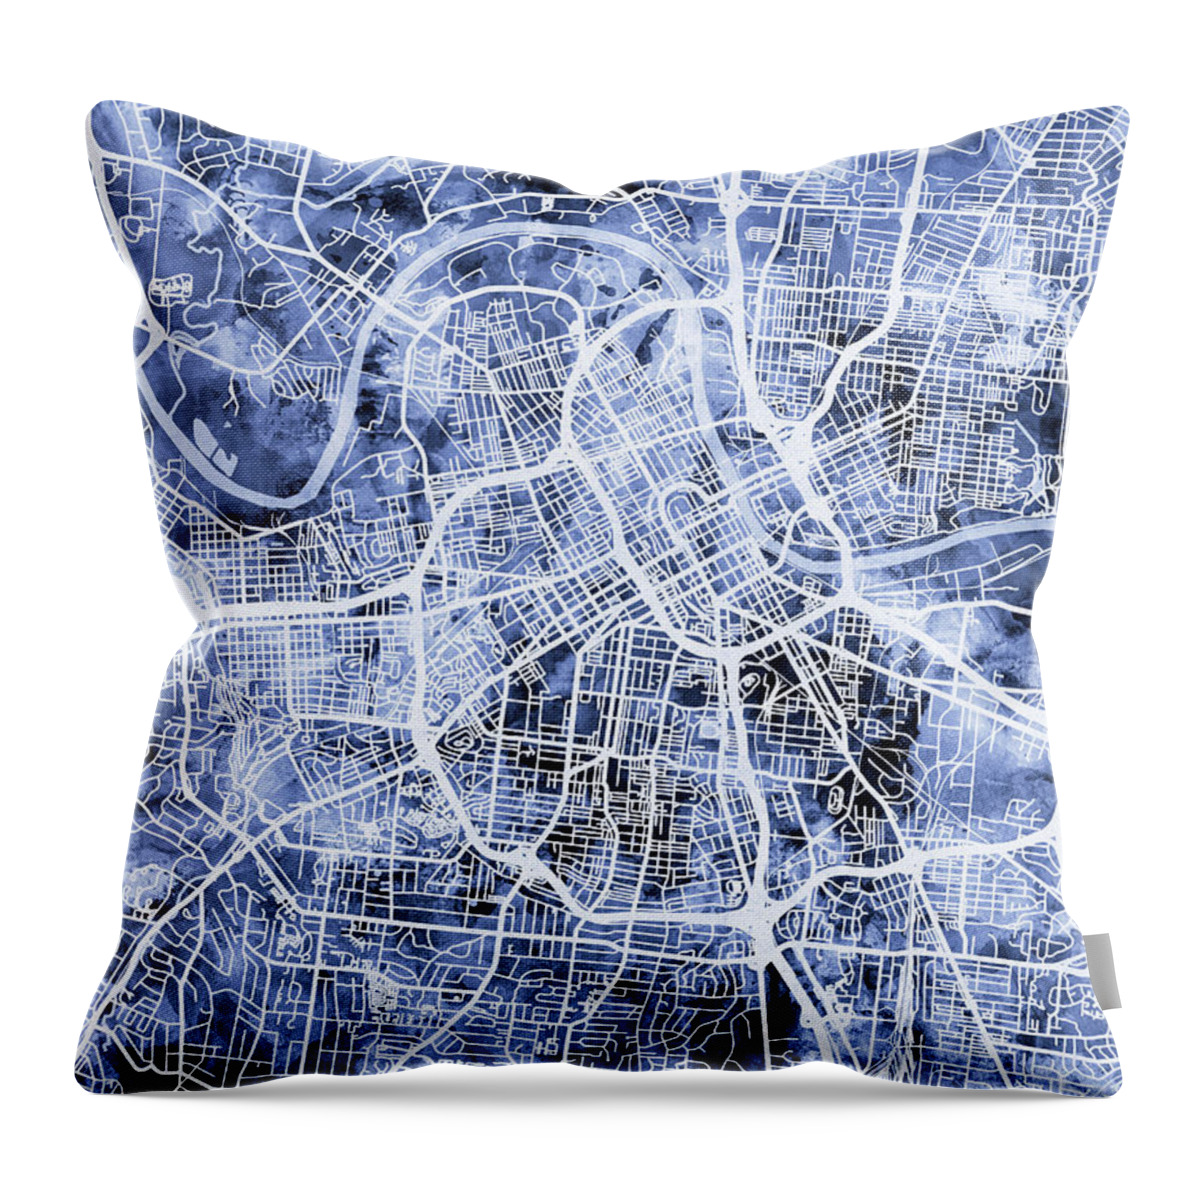 Nashville Throw Pillow featuring the digital art Nashville Tennessee City Map #4 by Michael Tompsett